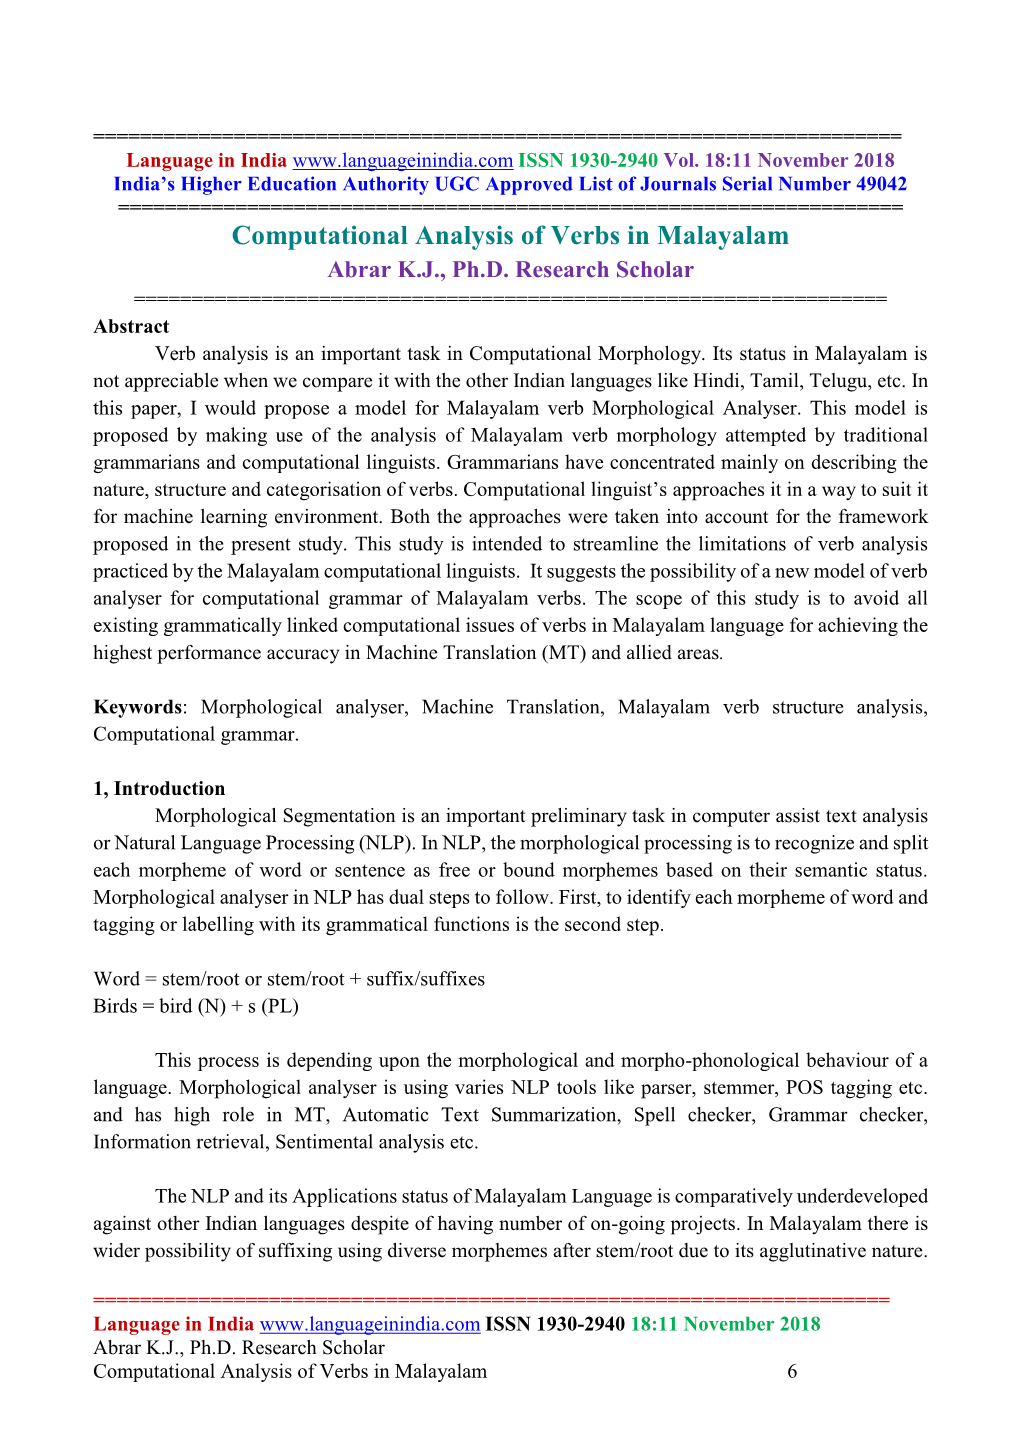 Computational Analysis of Verbs in Malayalam Abrar K.J., Ph.D